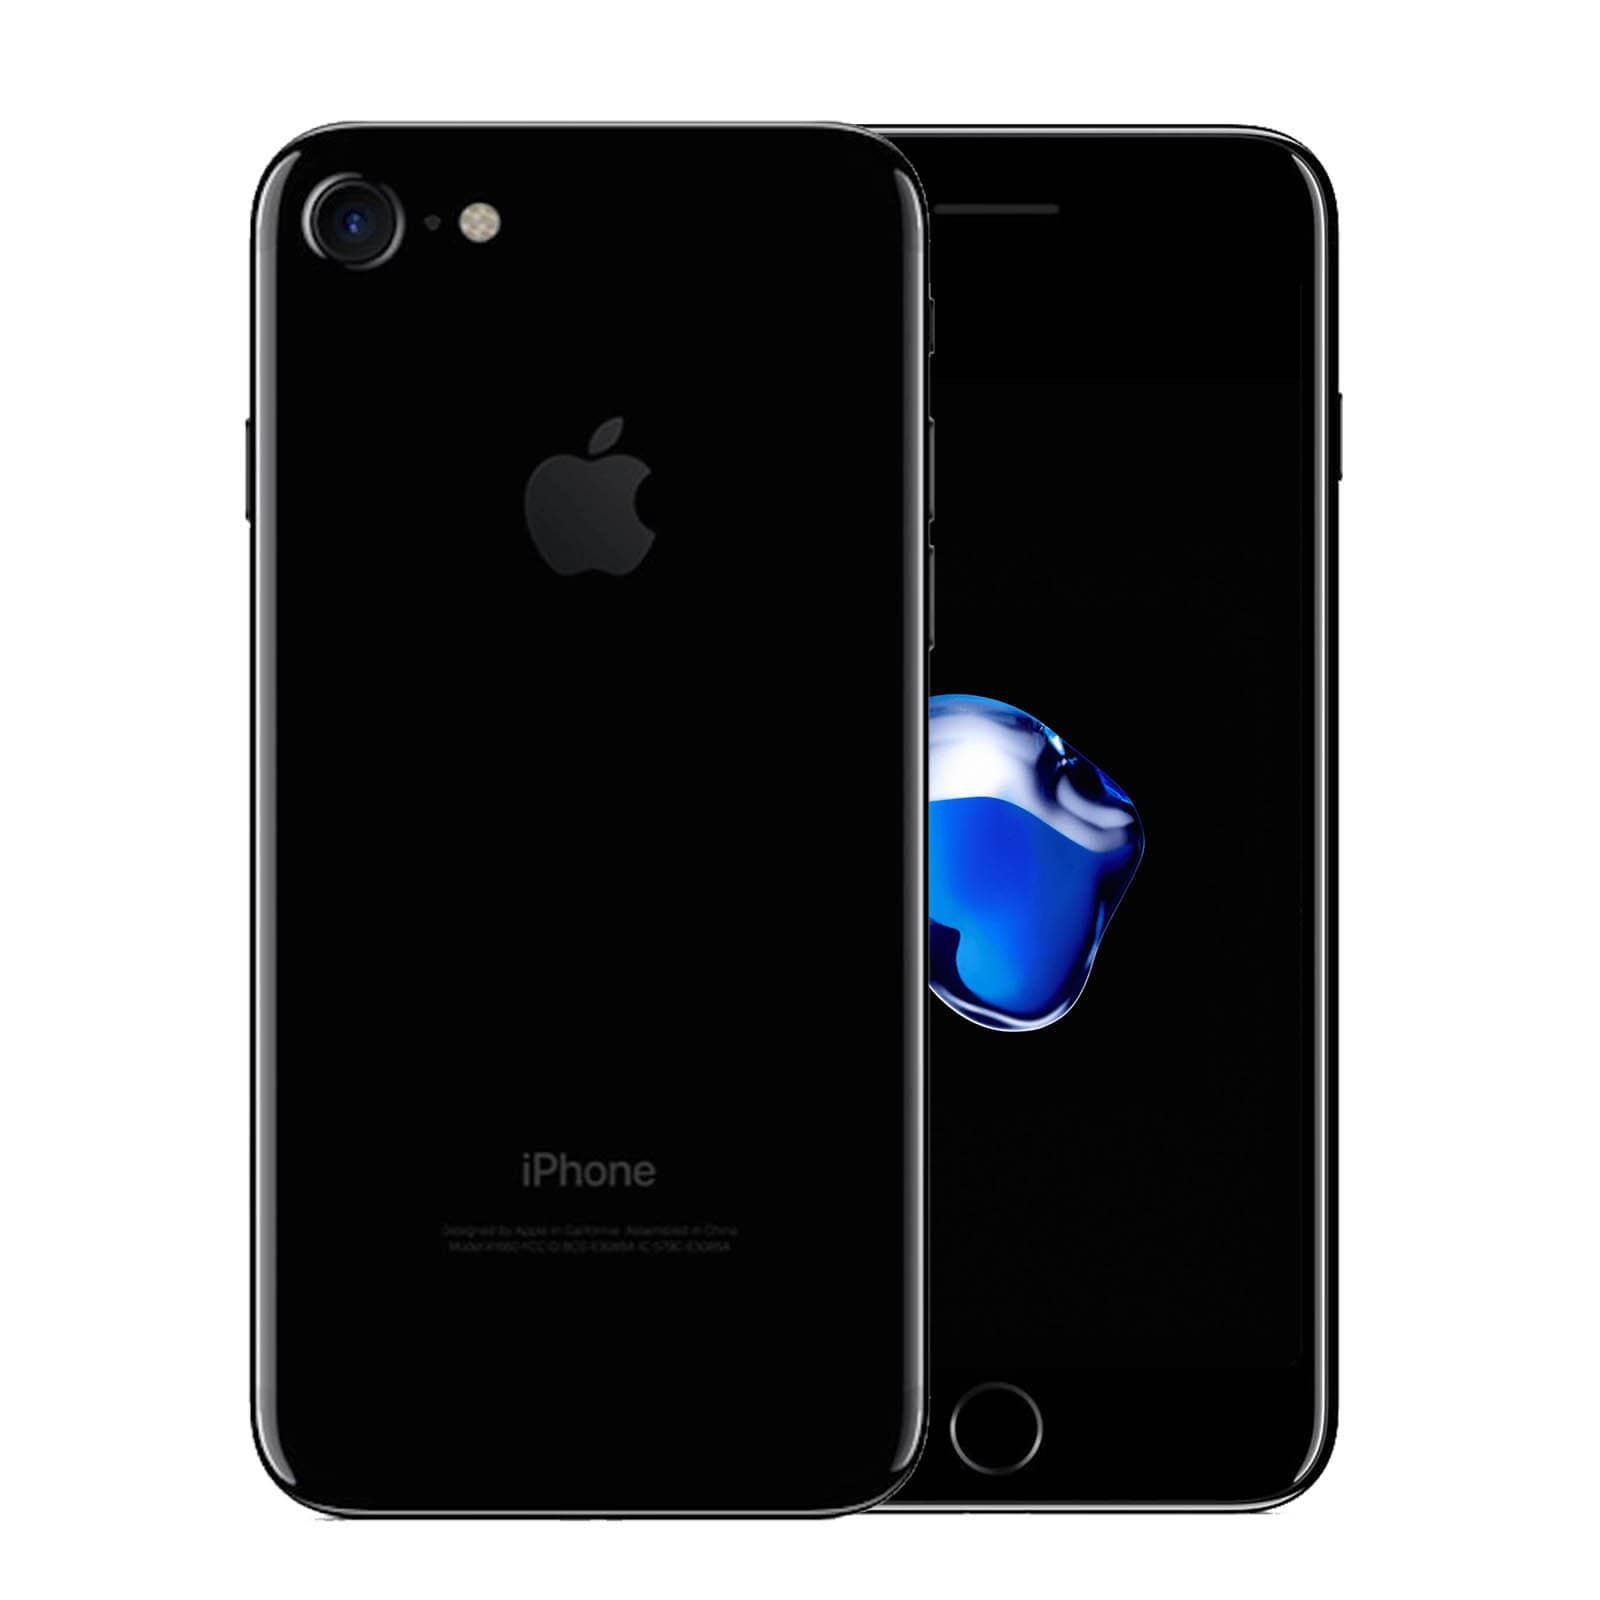 Apple iPhone 7 128GB Jet Black Very Good - Unlocked